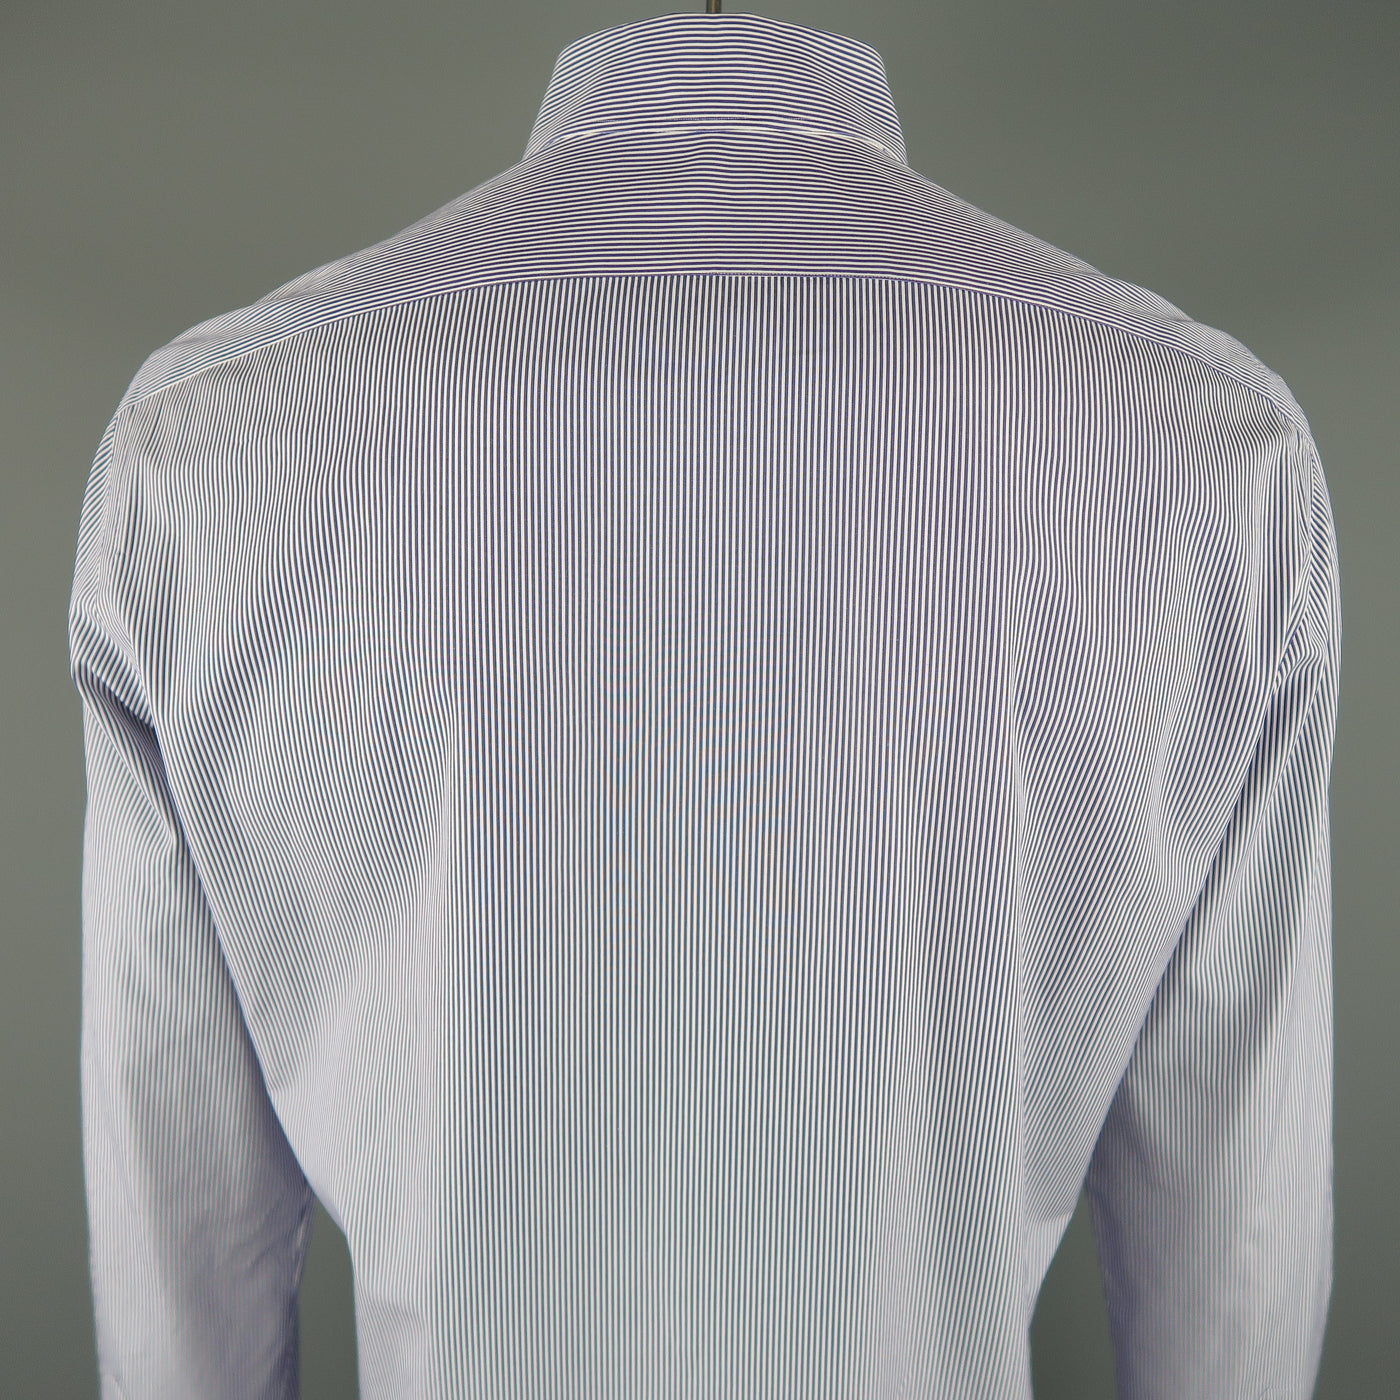 KITON Size L Navy Pinstripe Cotton Button Up Long Sleeve Shirt